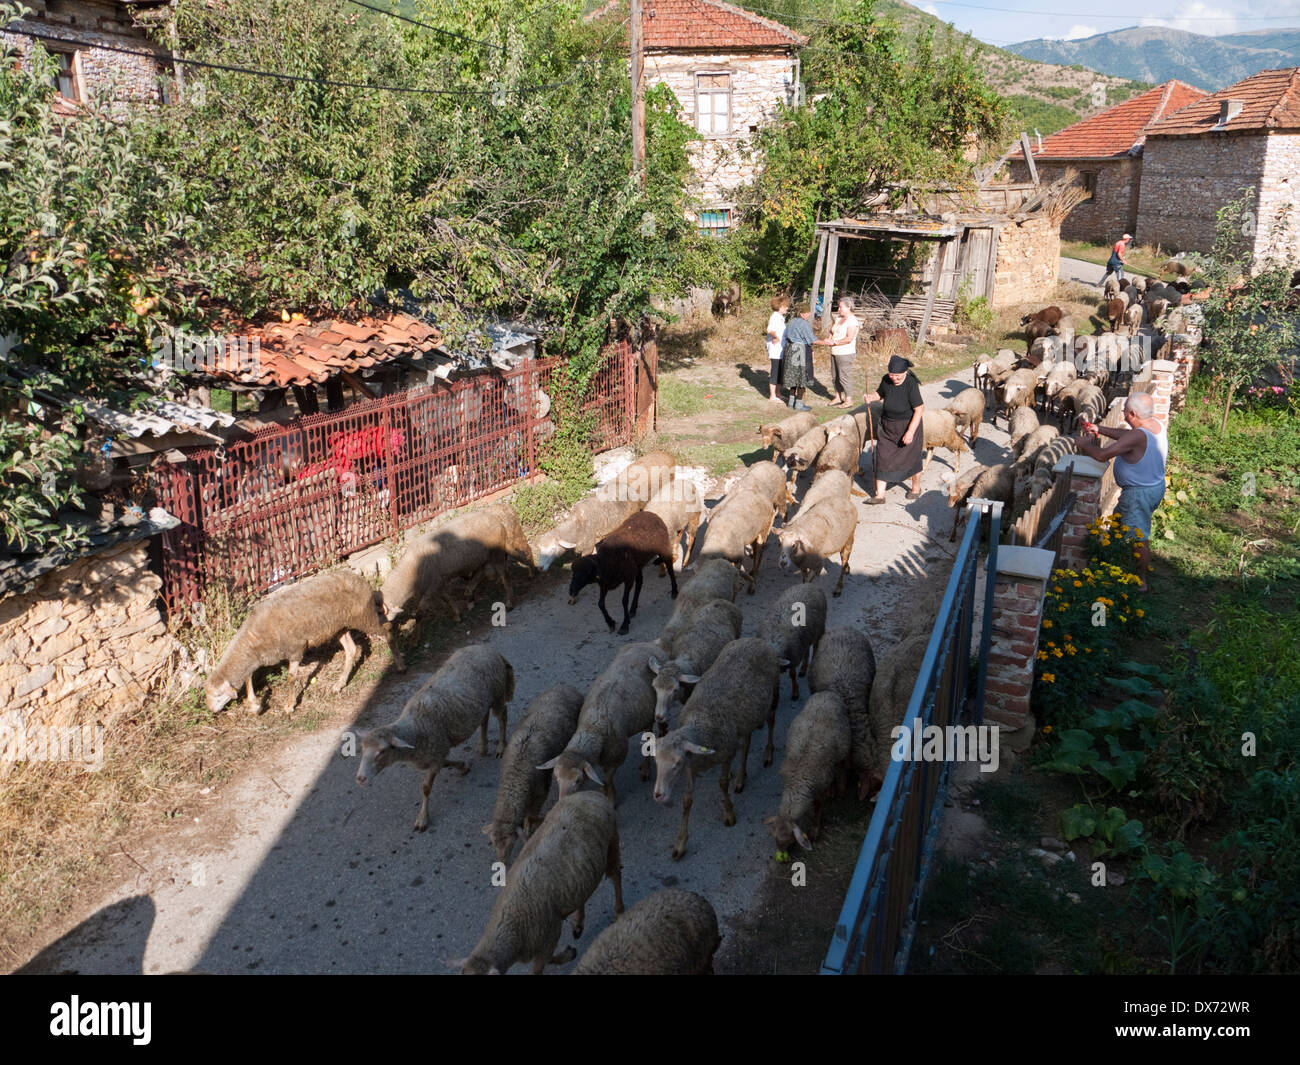 Old fashioned village life in Miokazi, near Kicevo, Republic of Macedonia Stock Photo